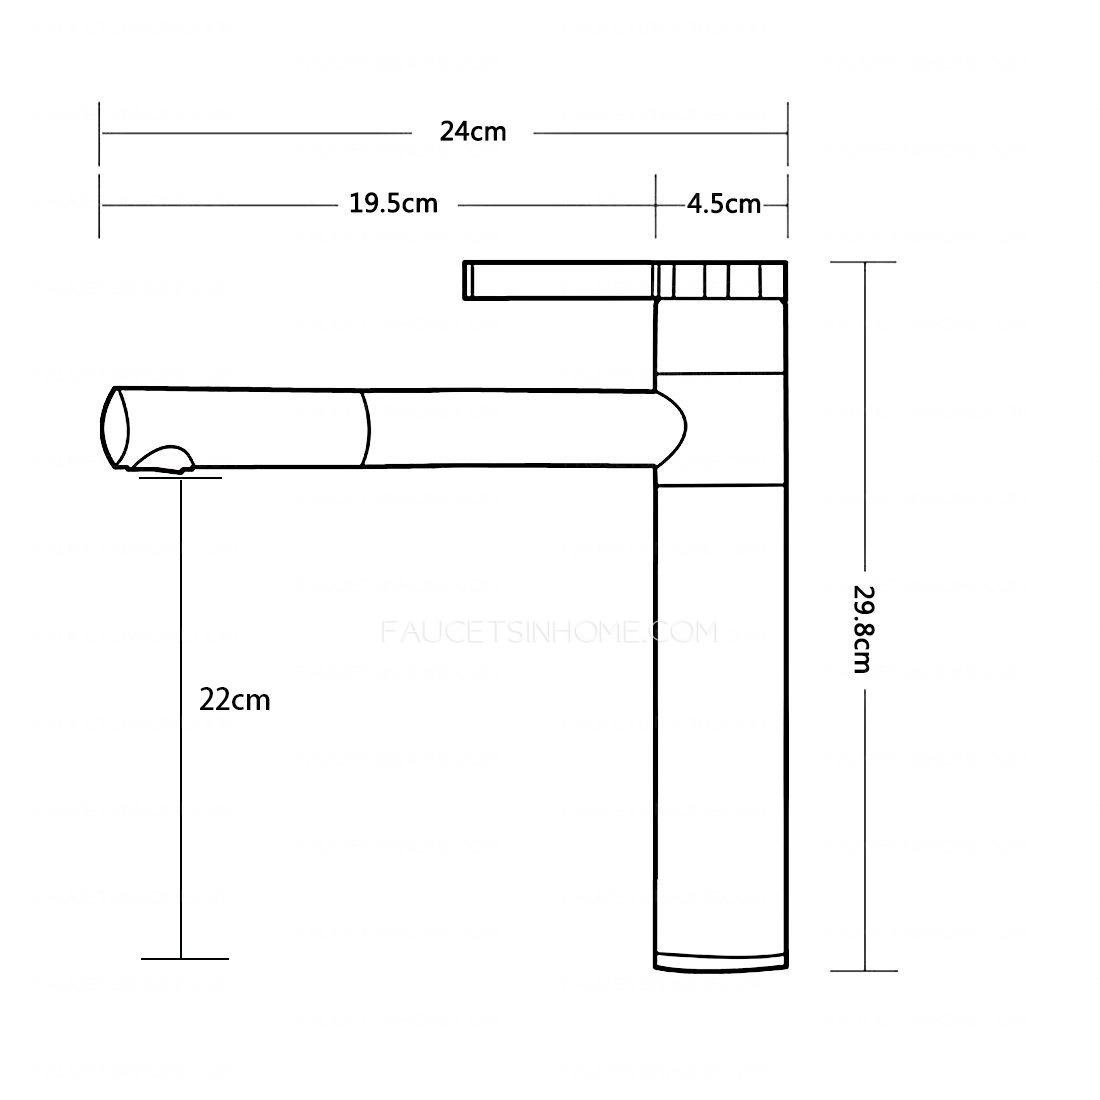 White Chrome Tall Brass Bathroom Faucet Mixer Tap Single Handle Rotatable